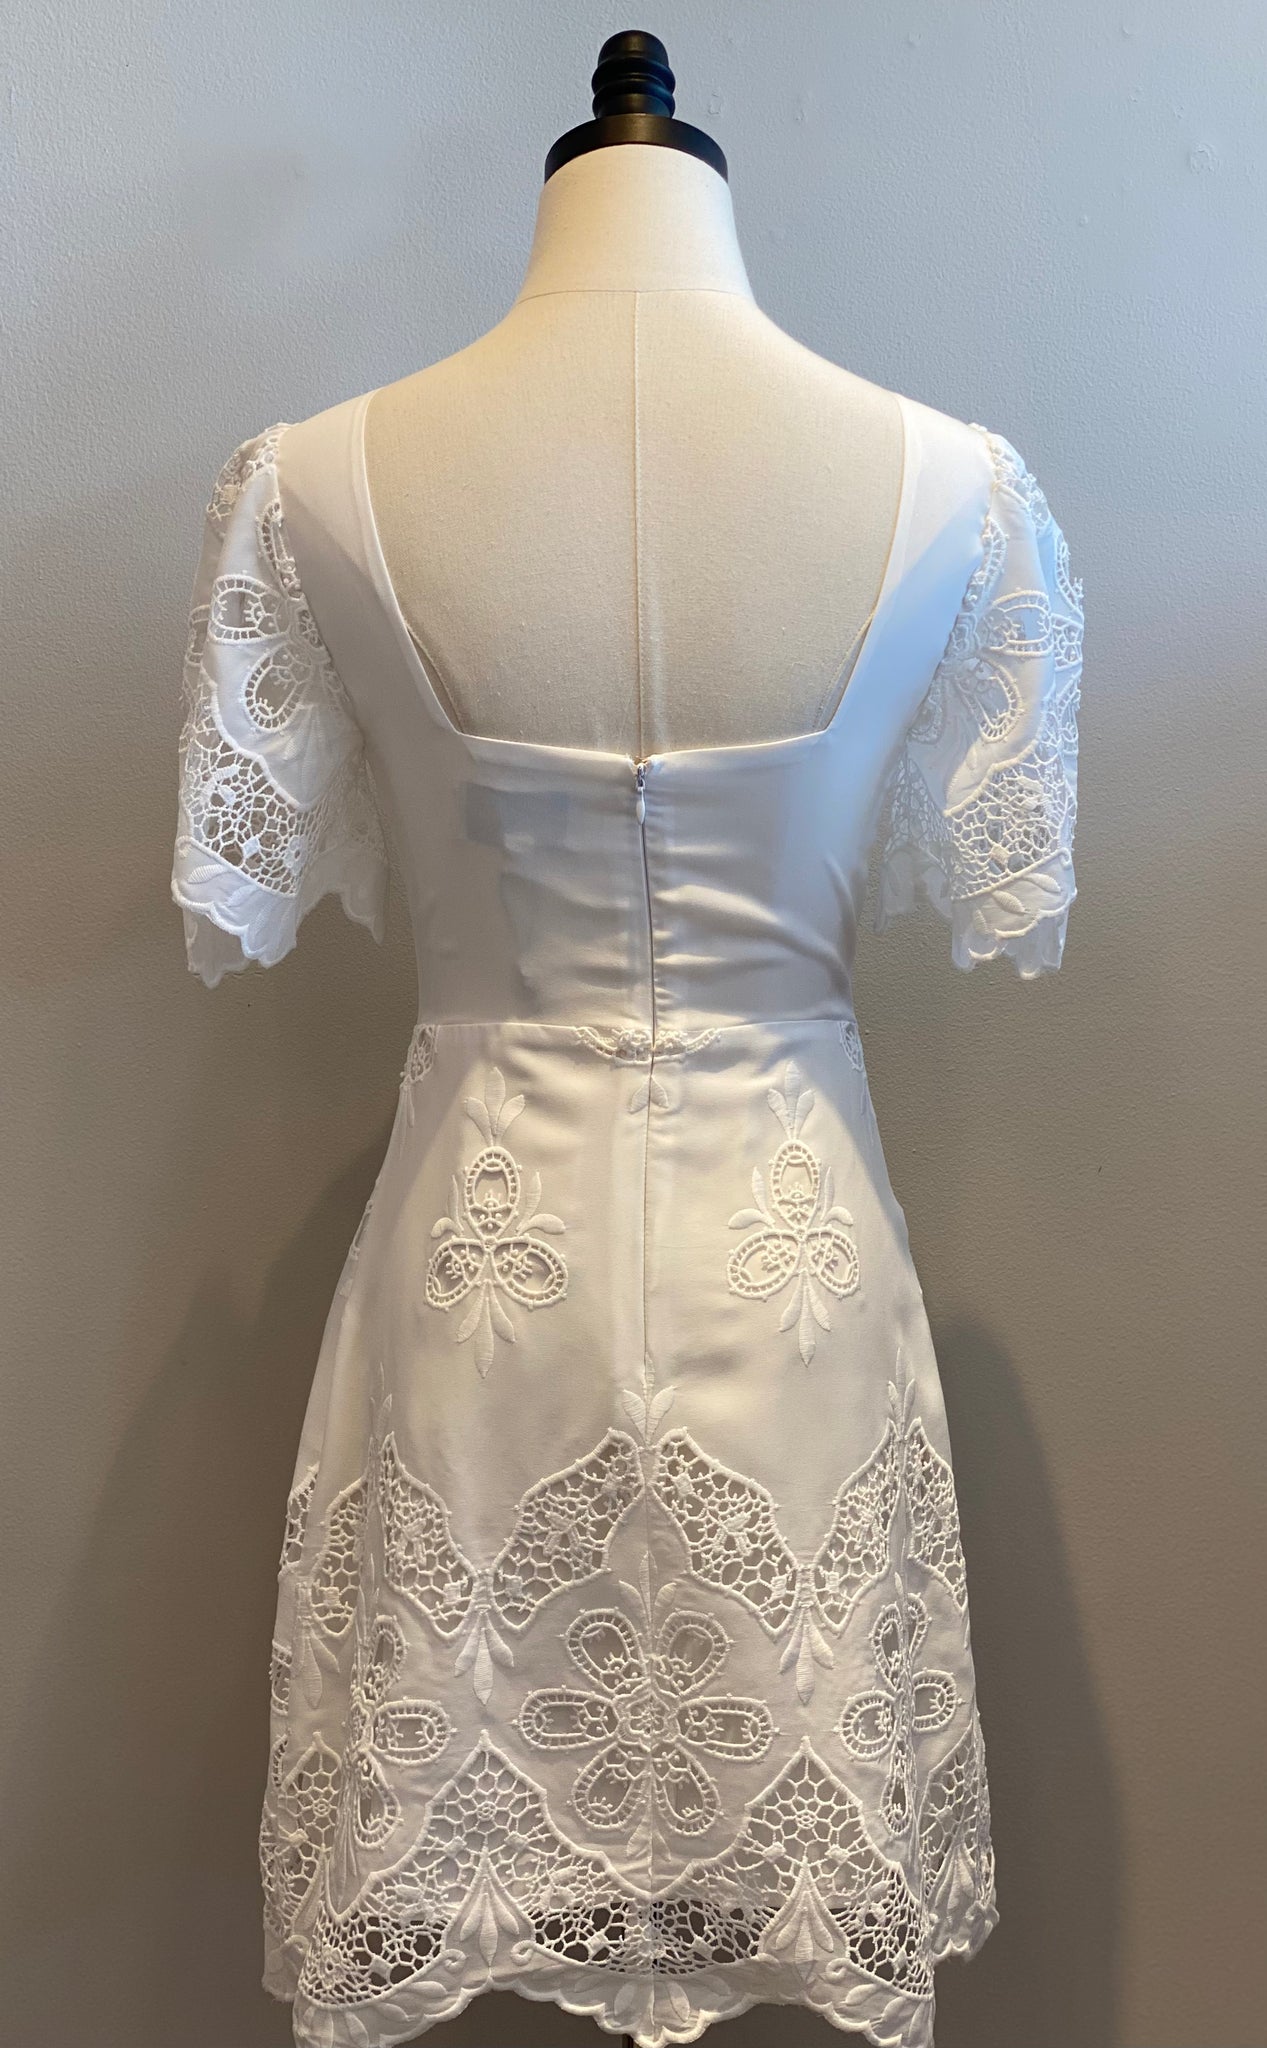 Bonvi Scalloped Embroidered Dress